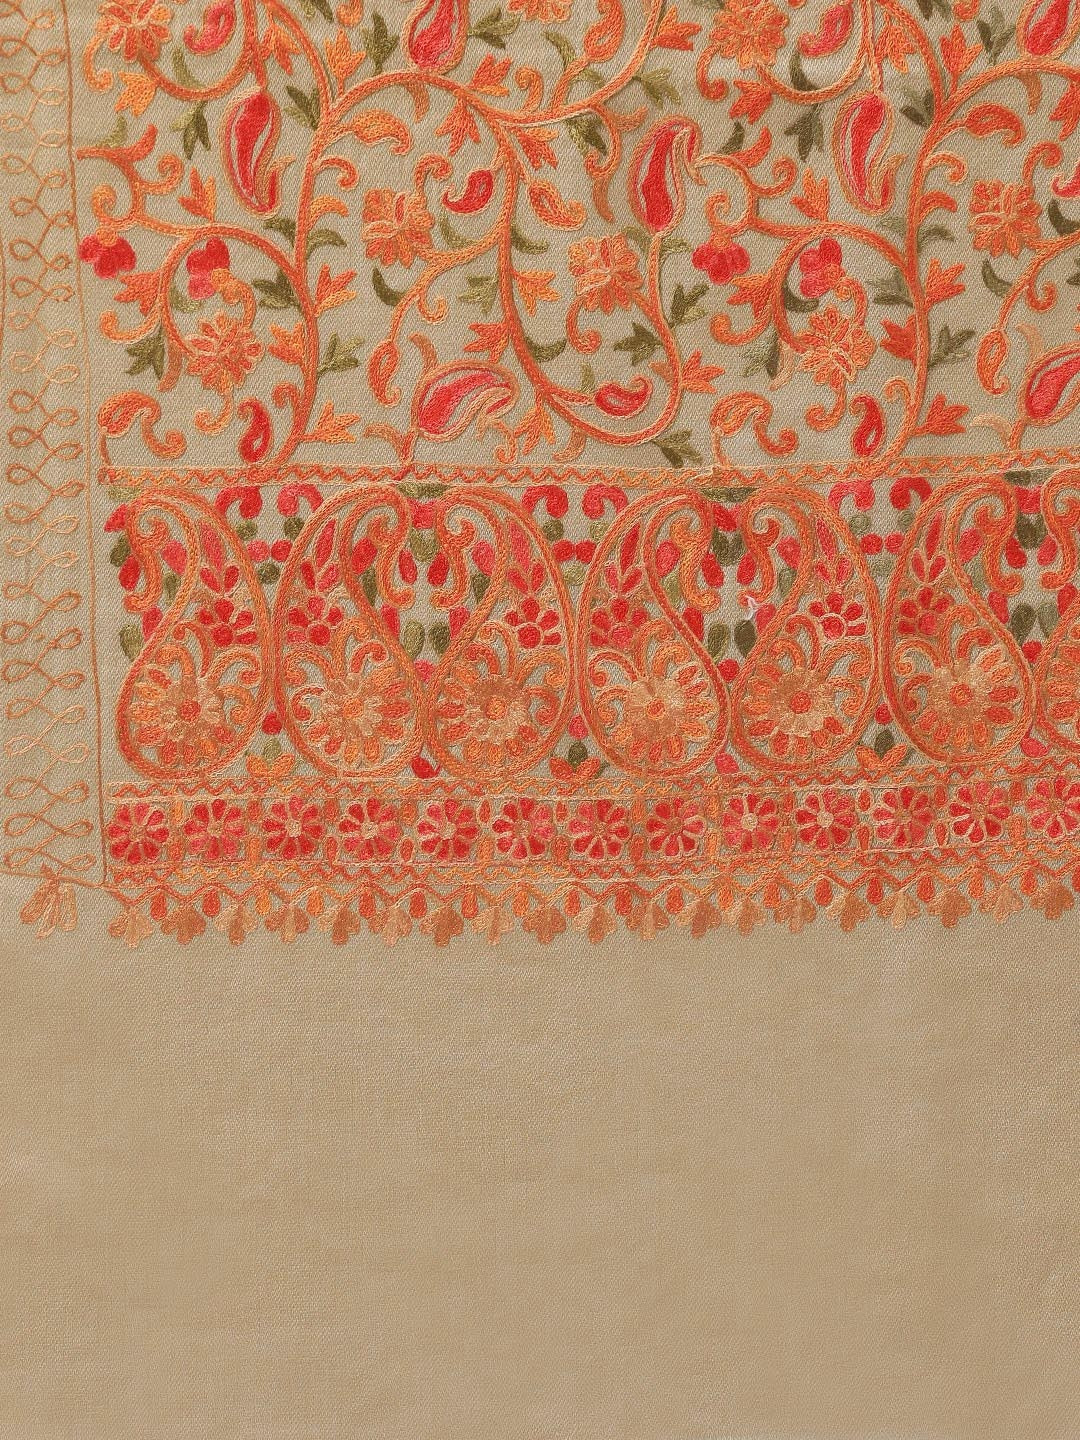 The Paisley Aari Embroidered Shawl